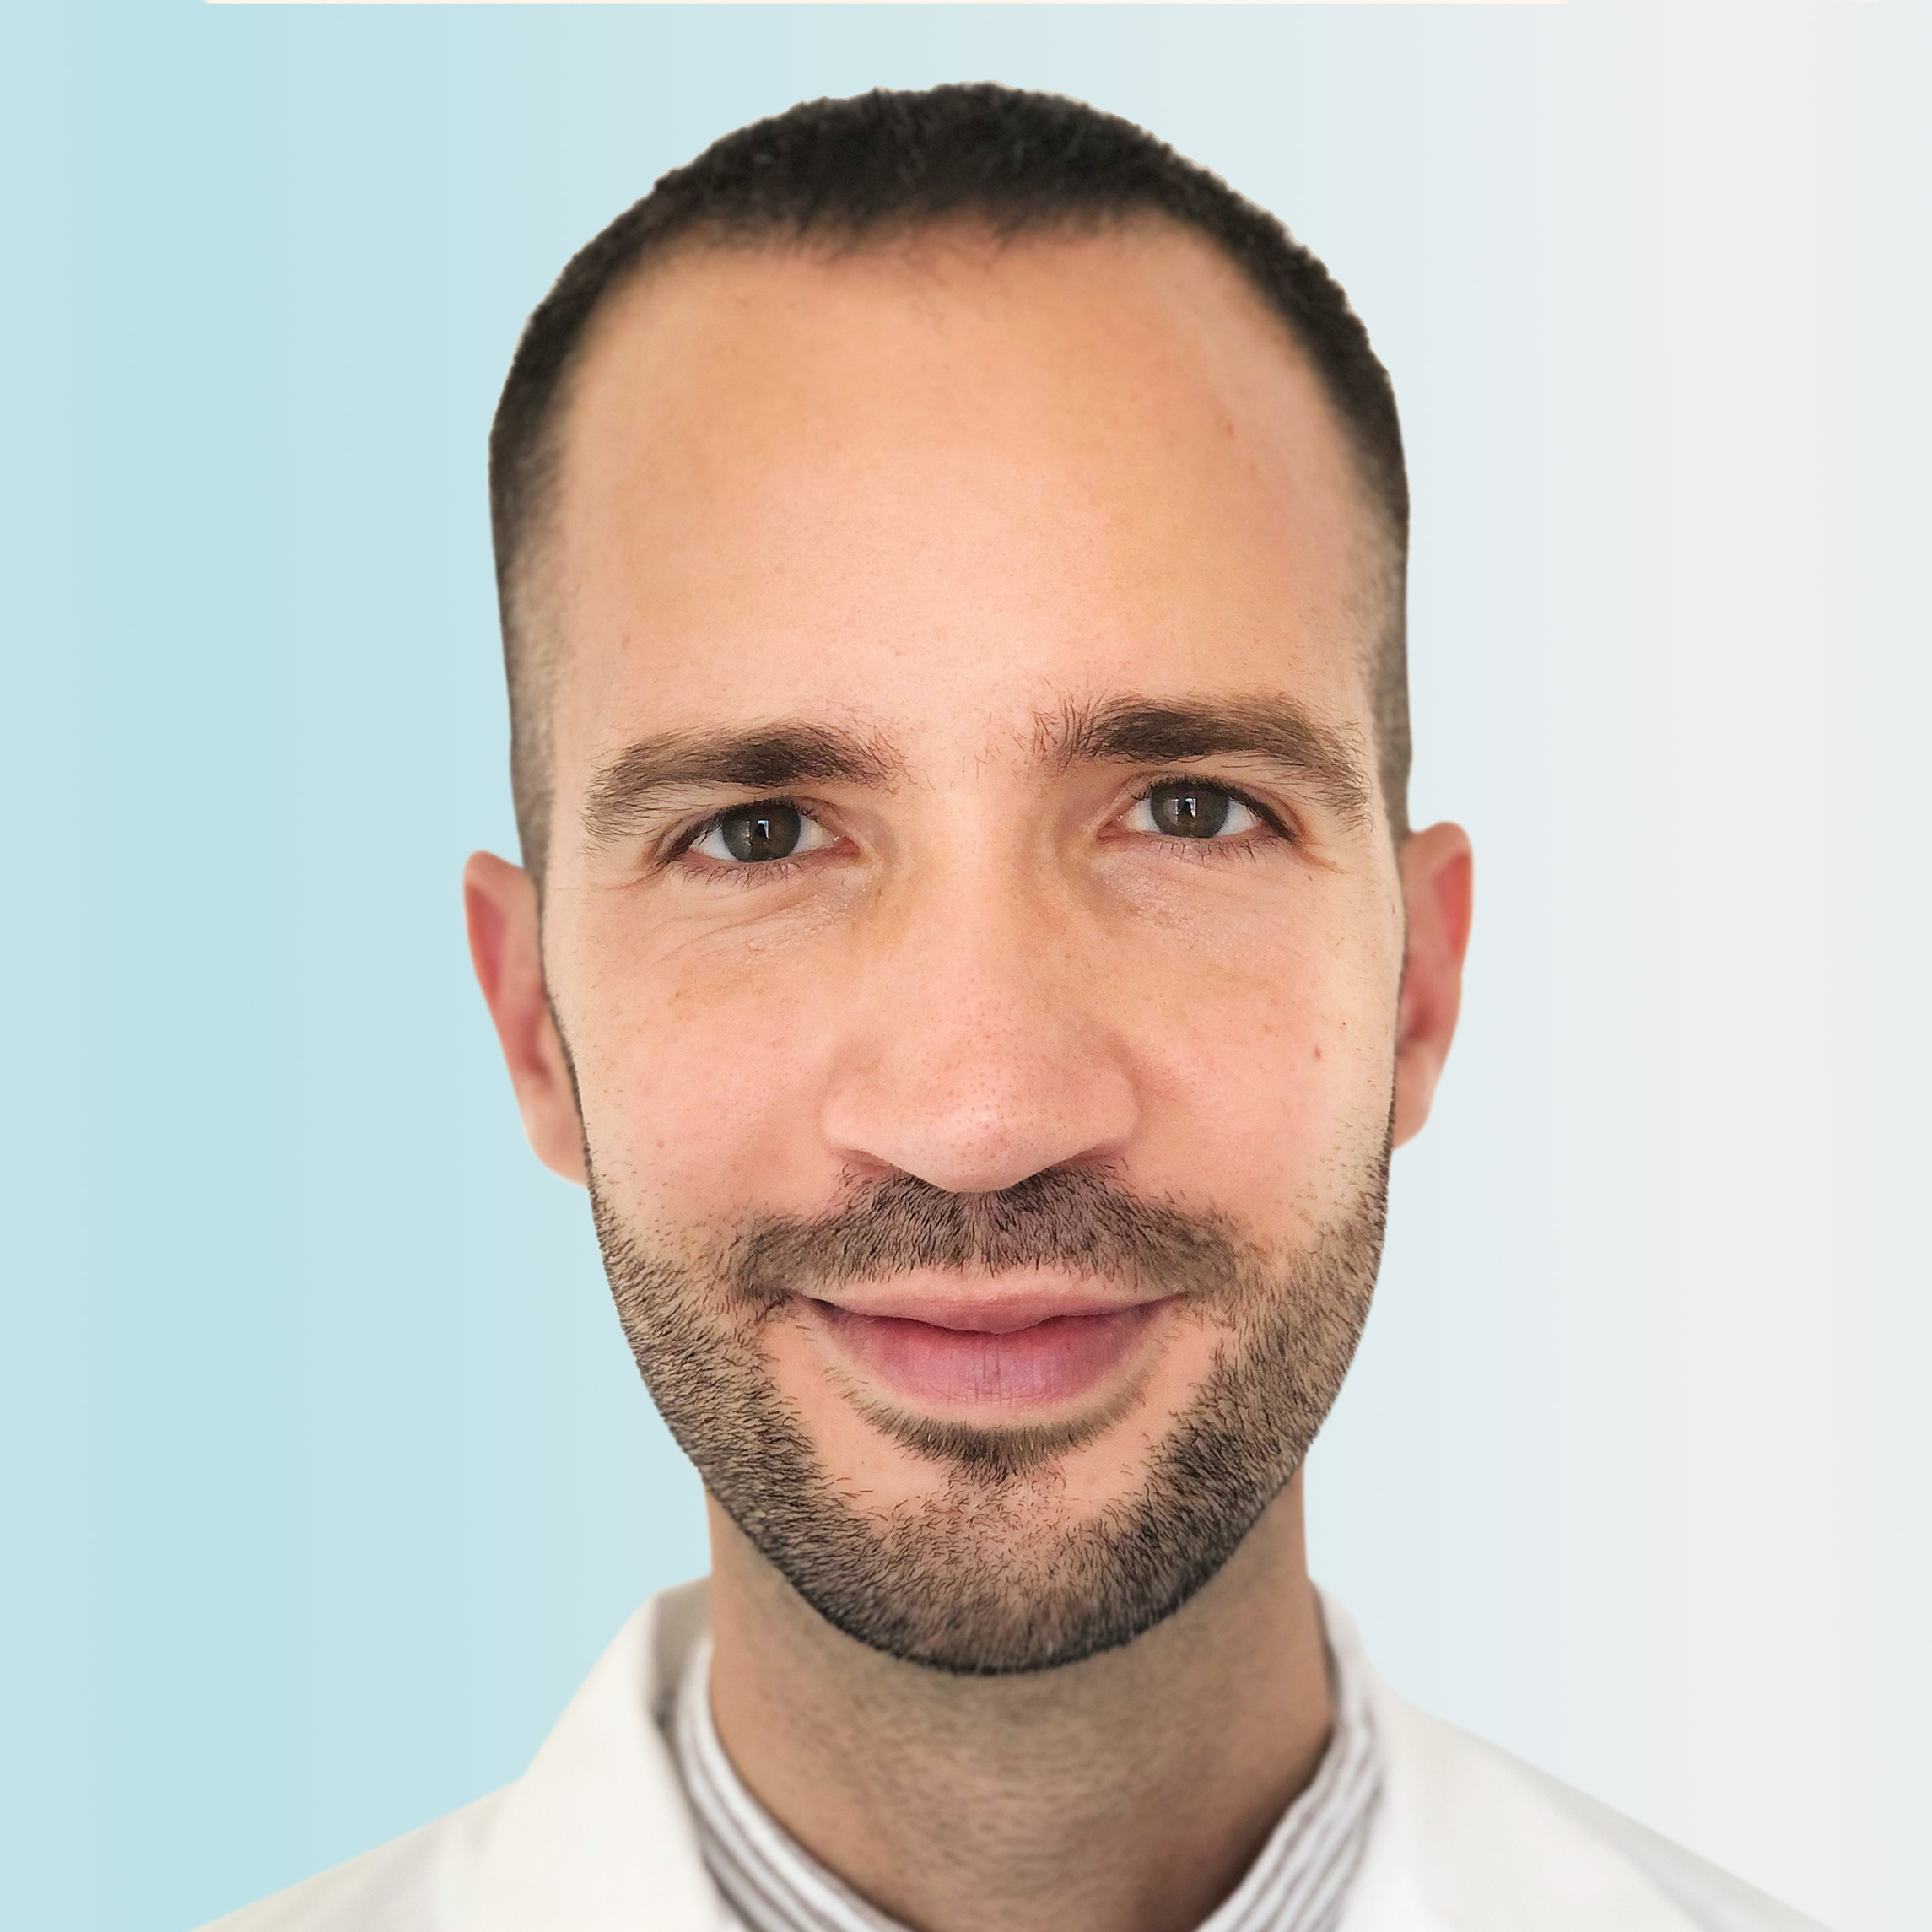 Dermatologist, Dr. Lorenzo Grizzetti